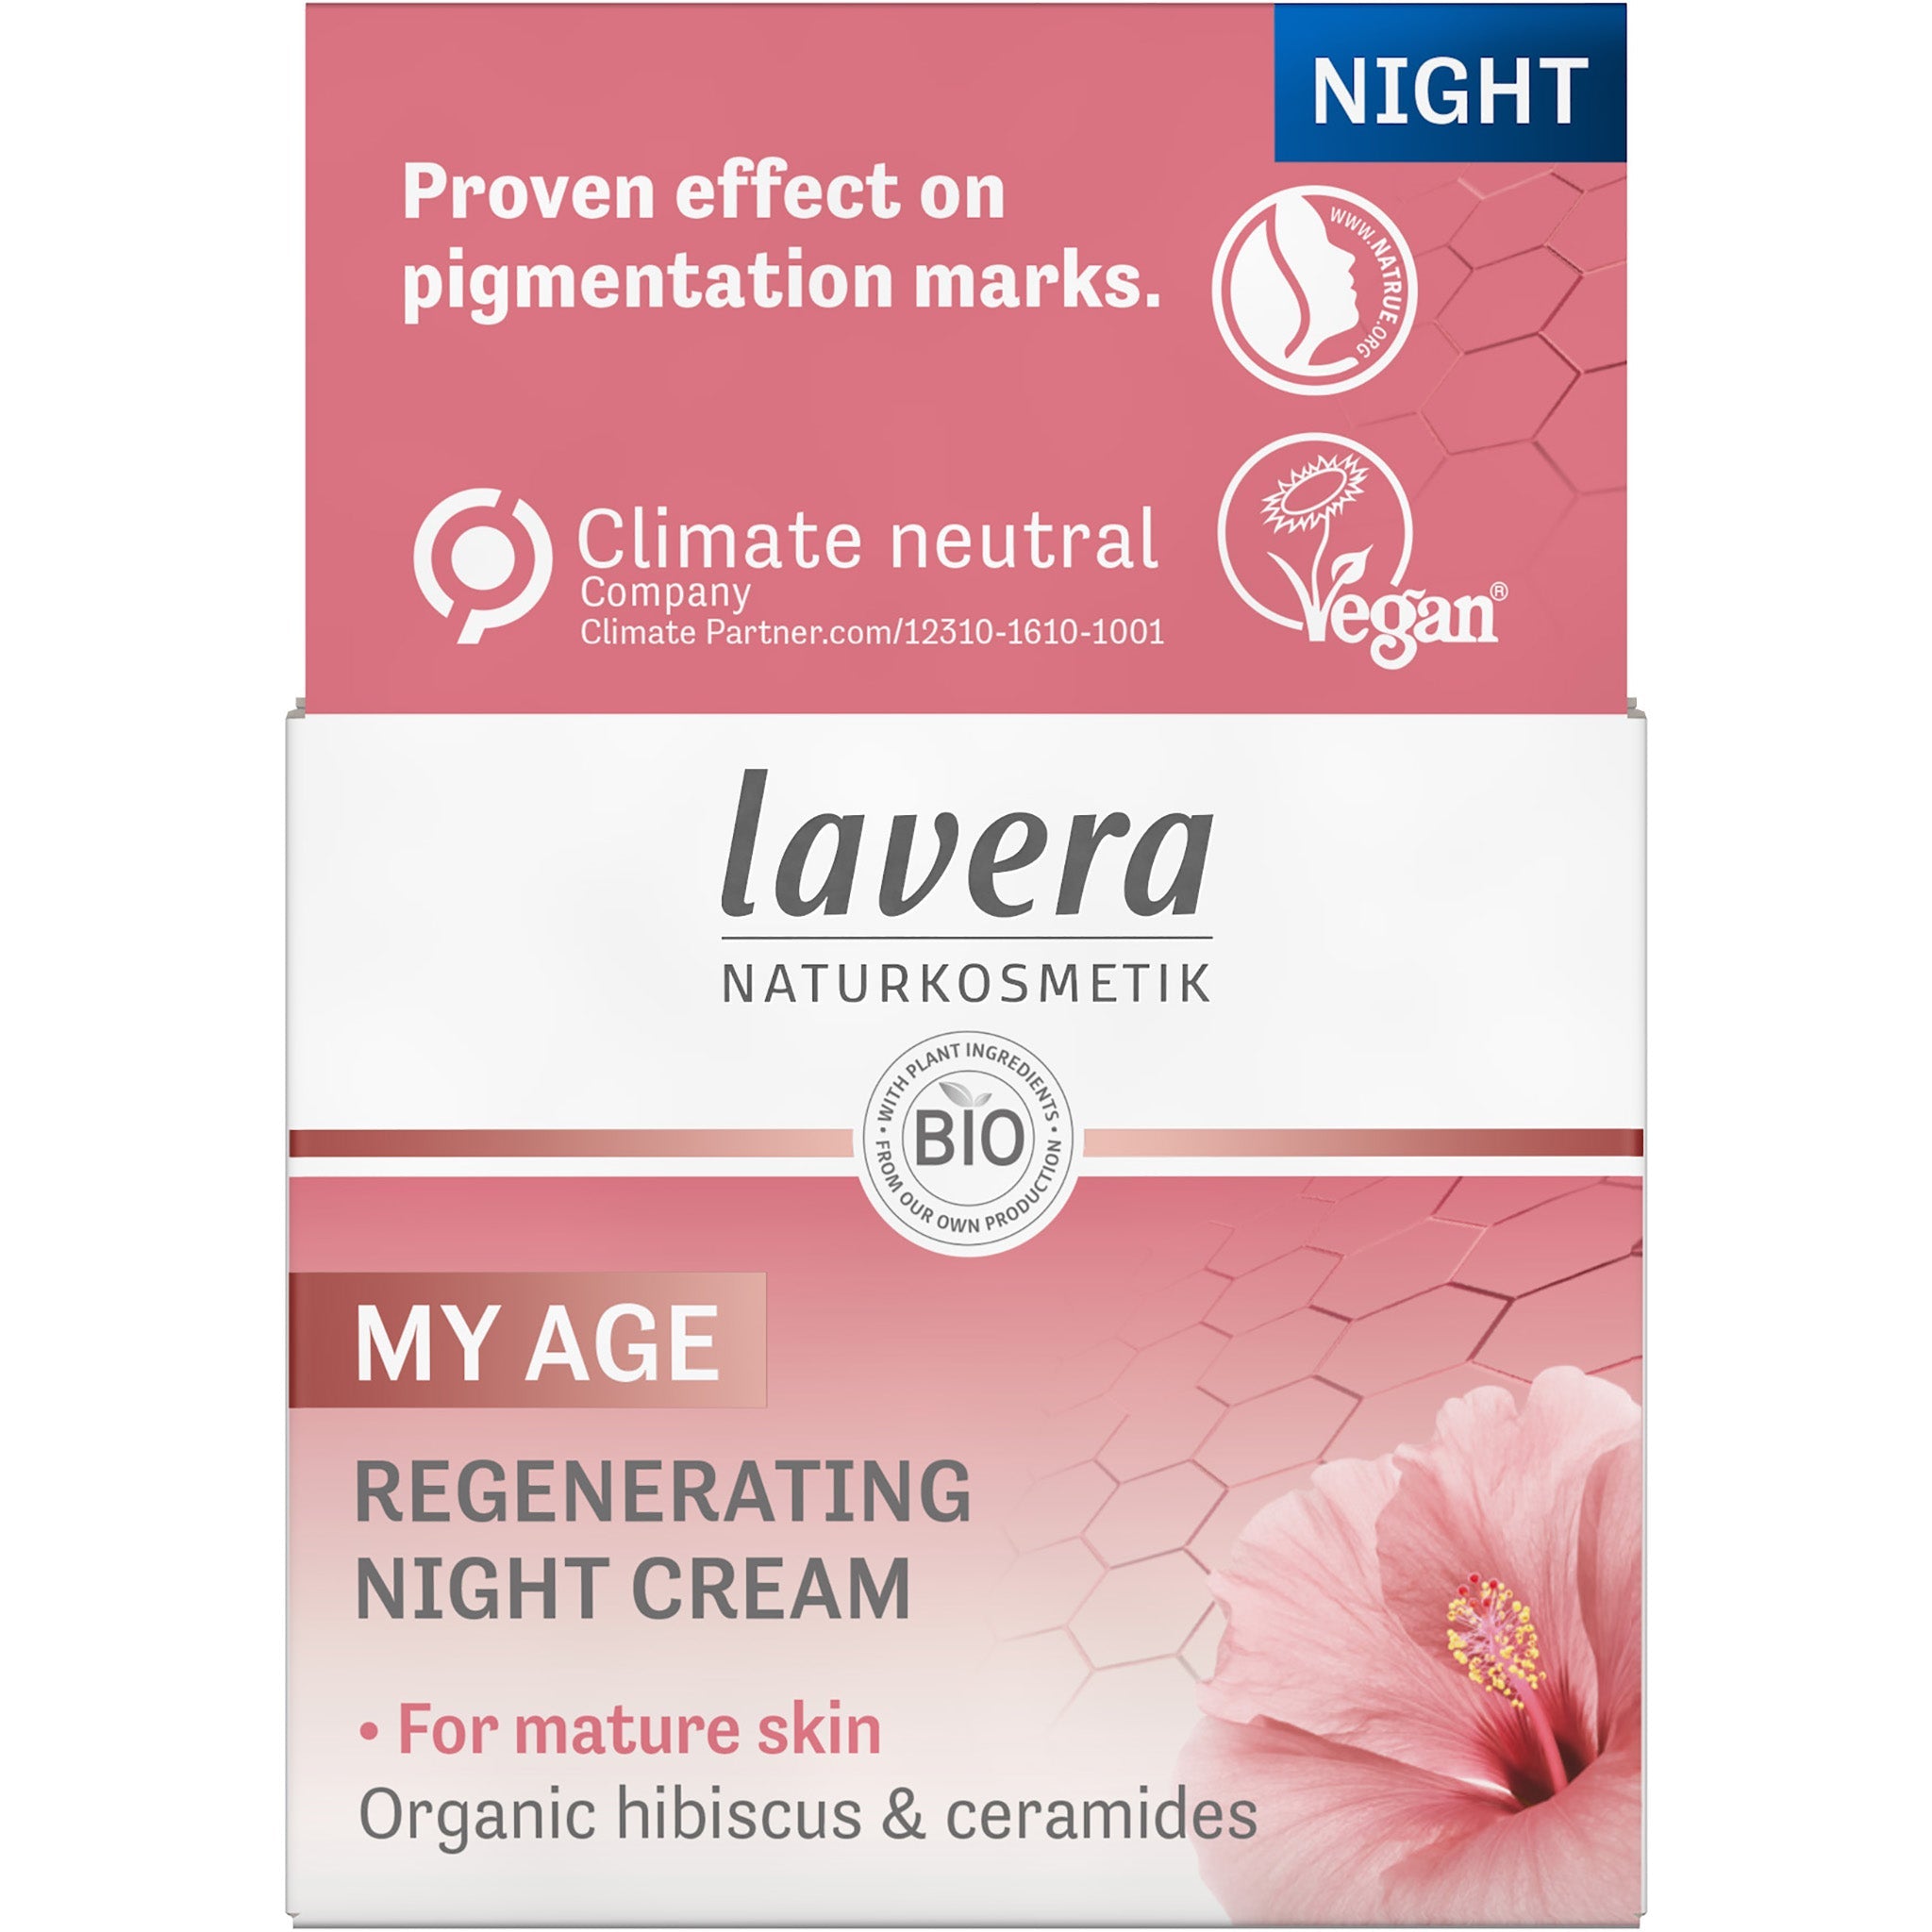 My Age Regenerating Night Cream - mypure.co.uk